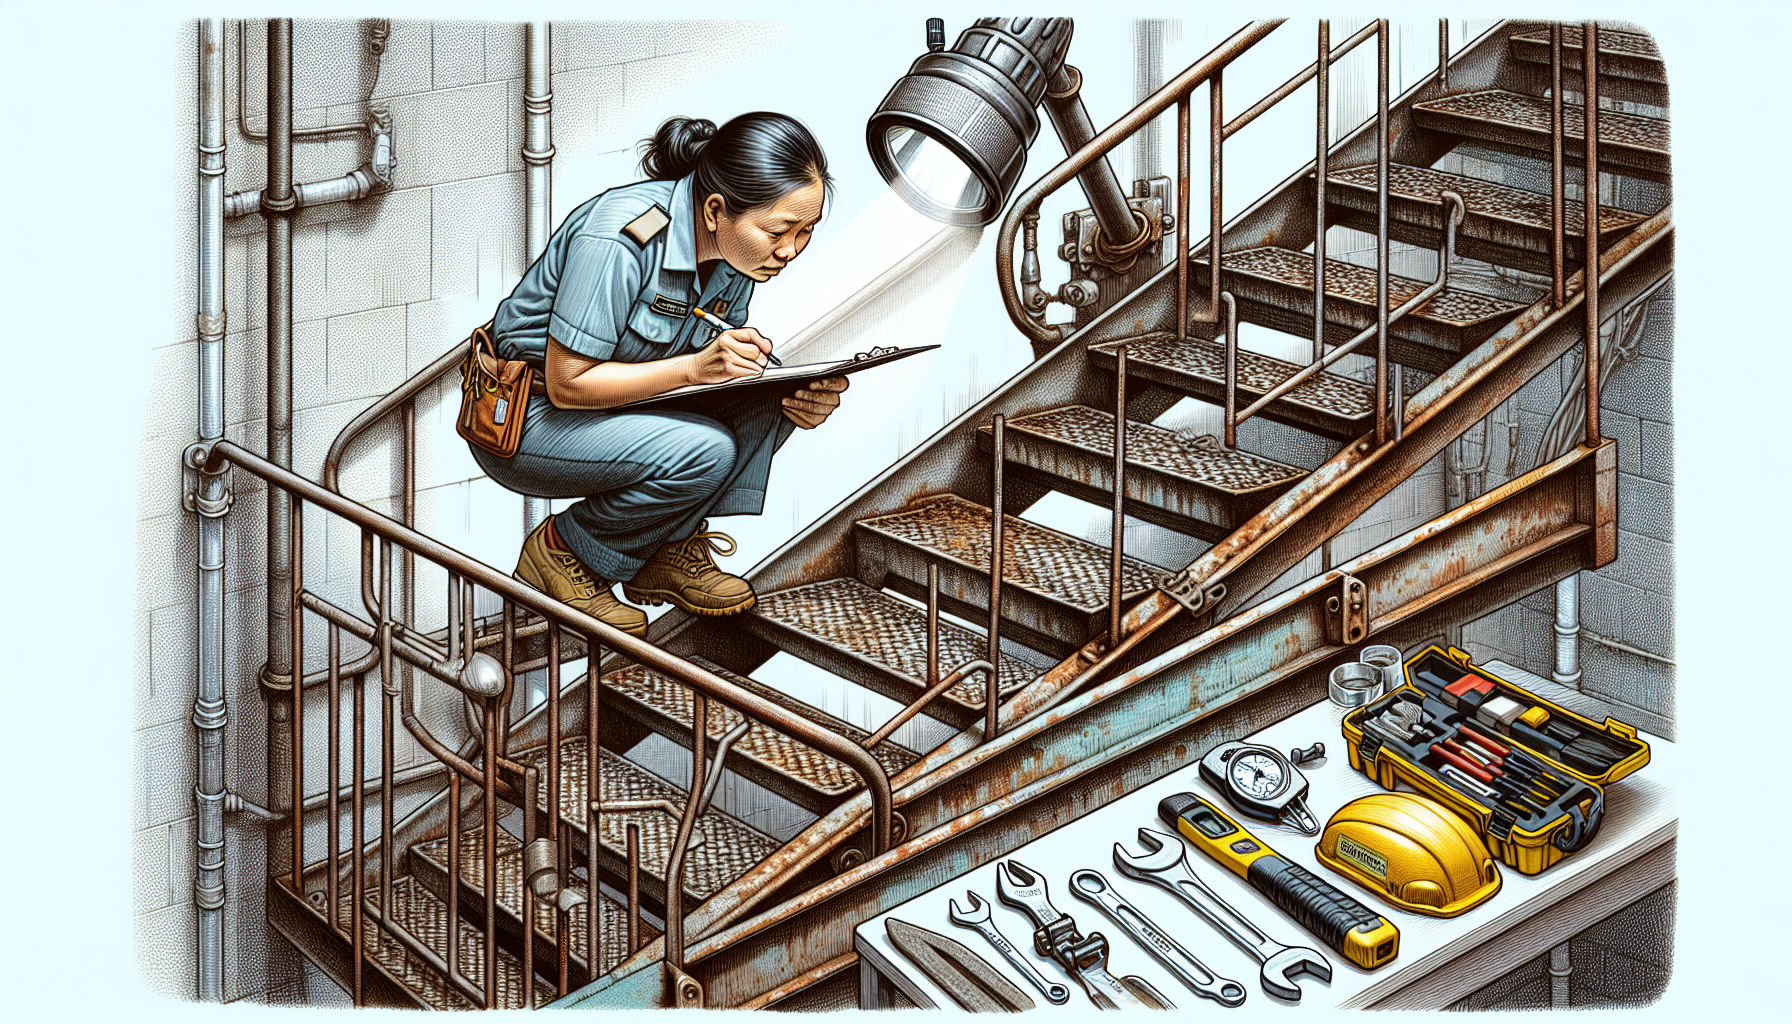 Illustration of a fire escape inspection in progress